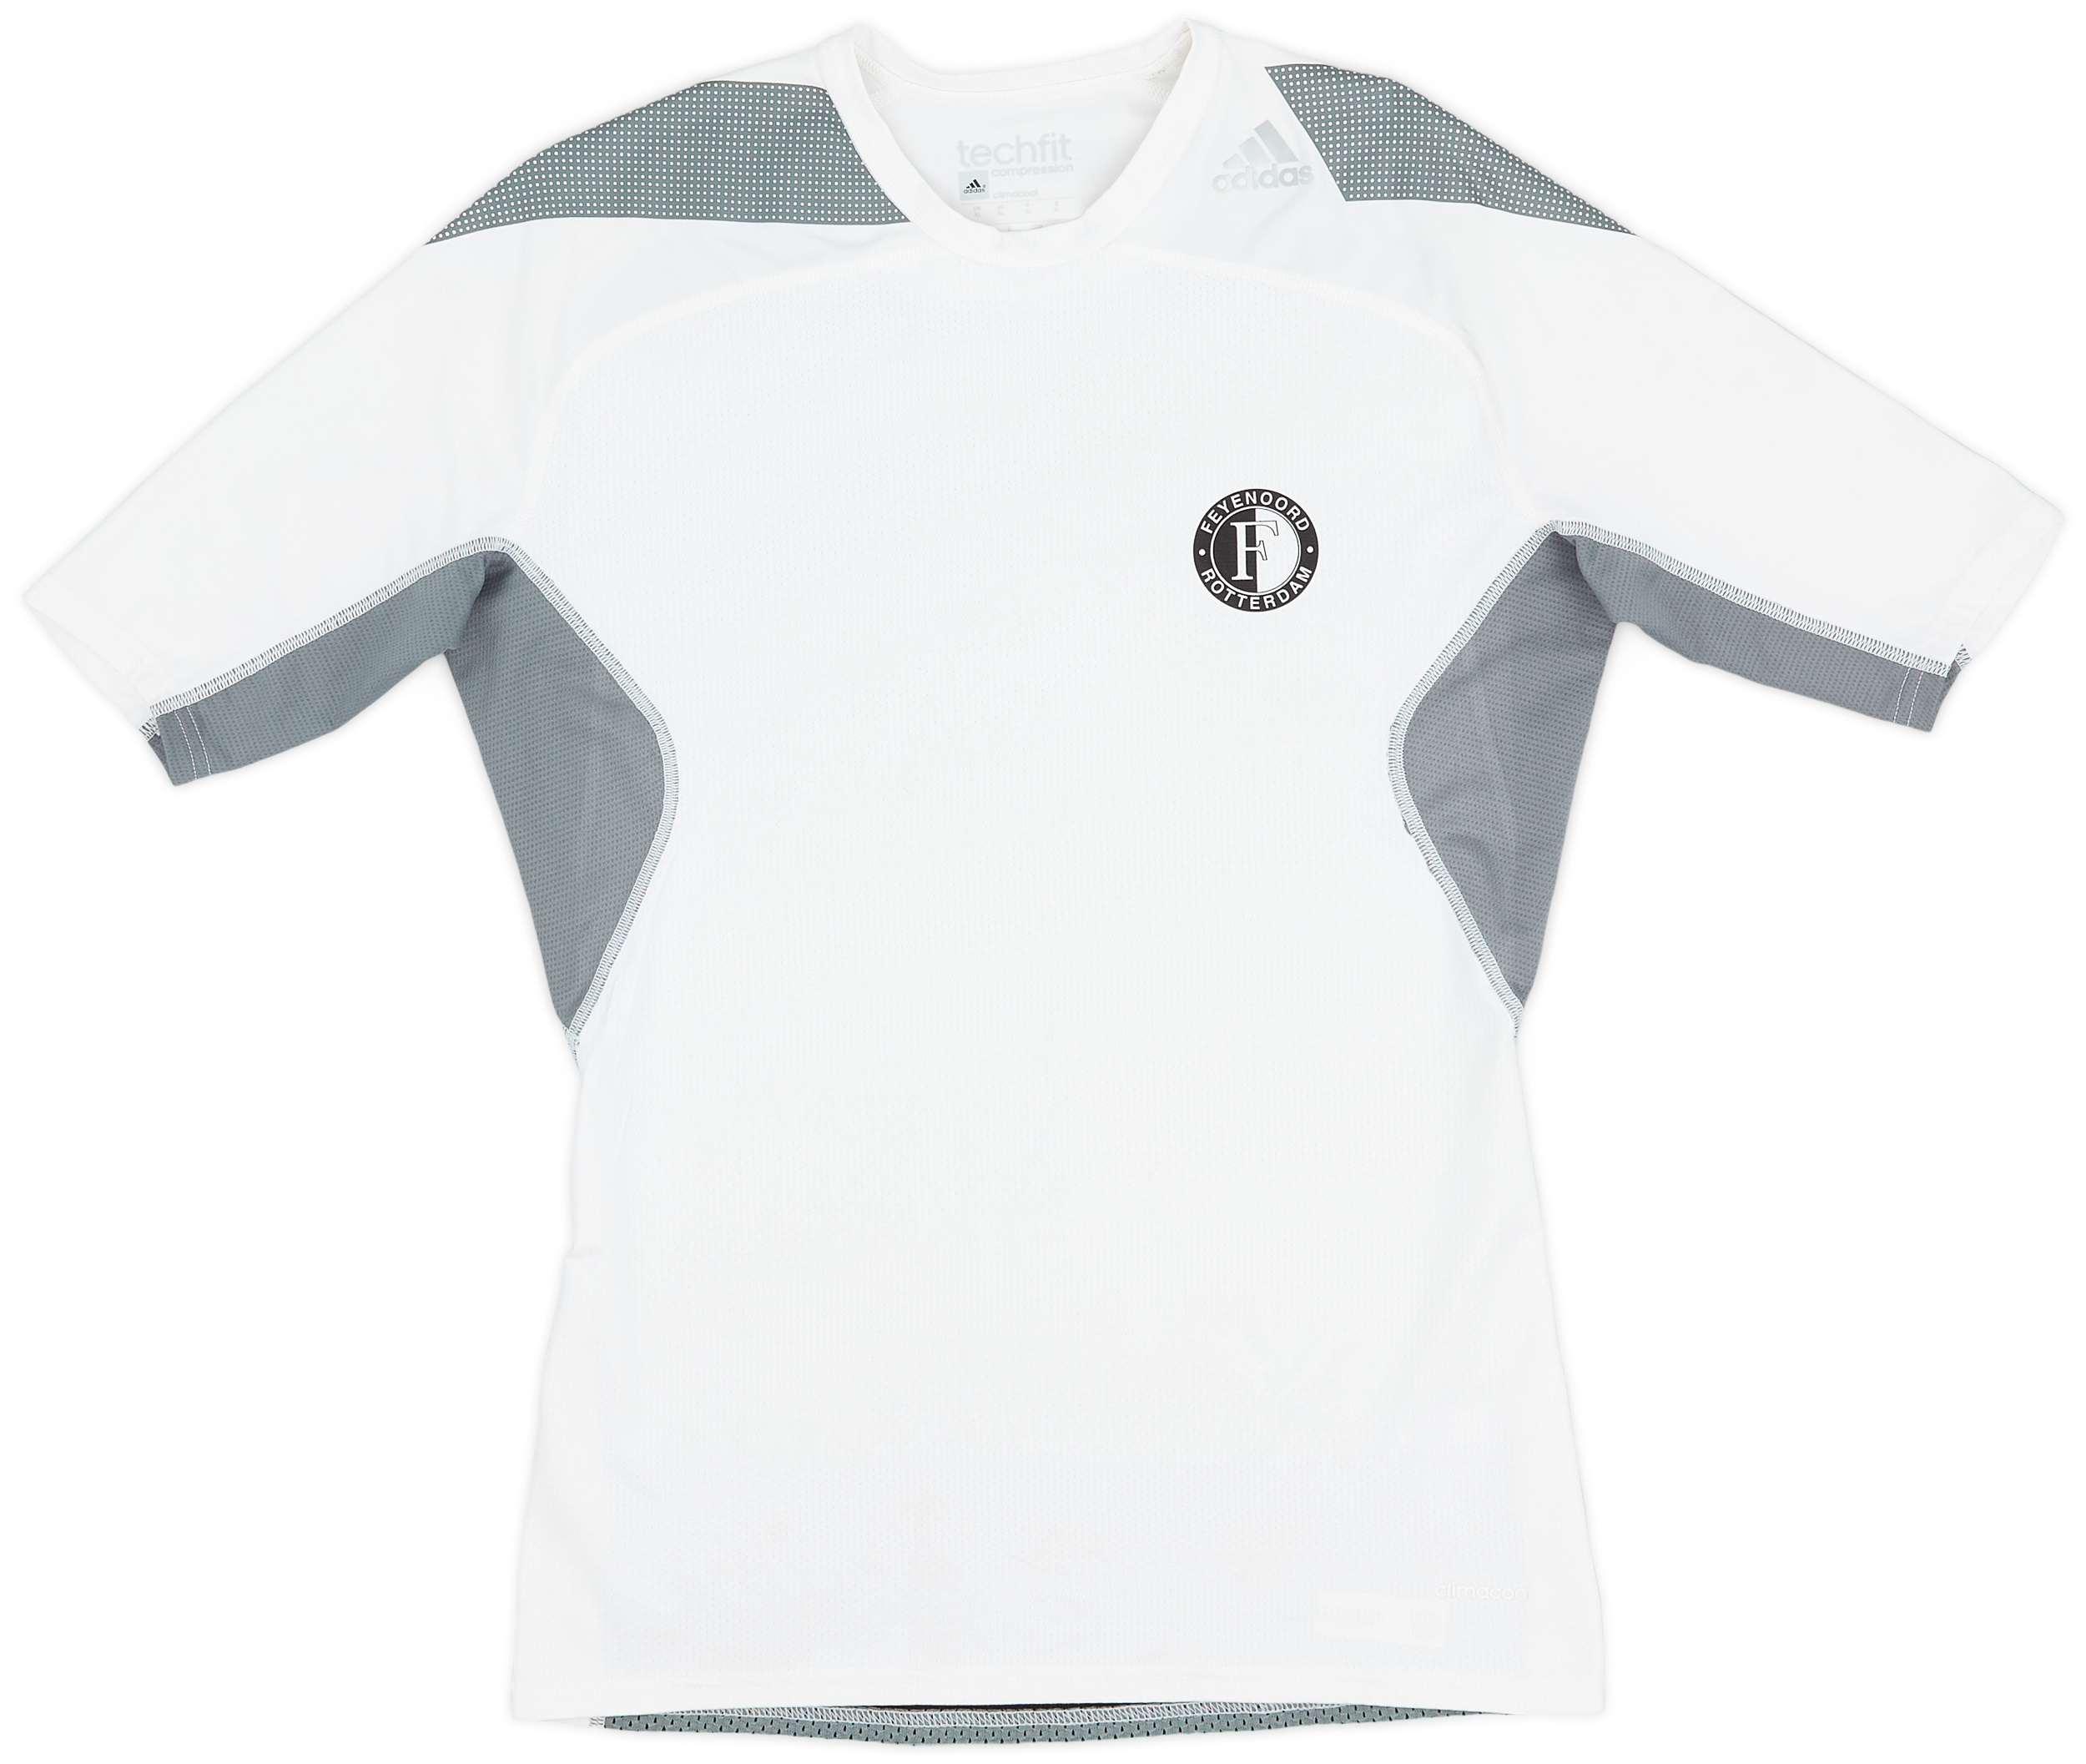 Retro Feyenoord Shirt